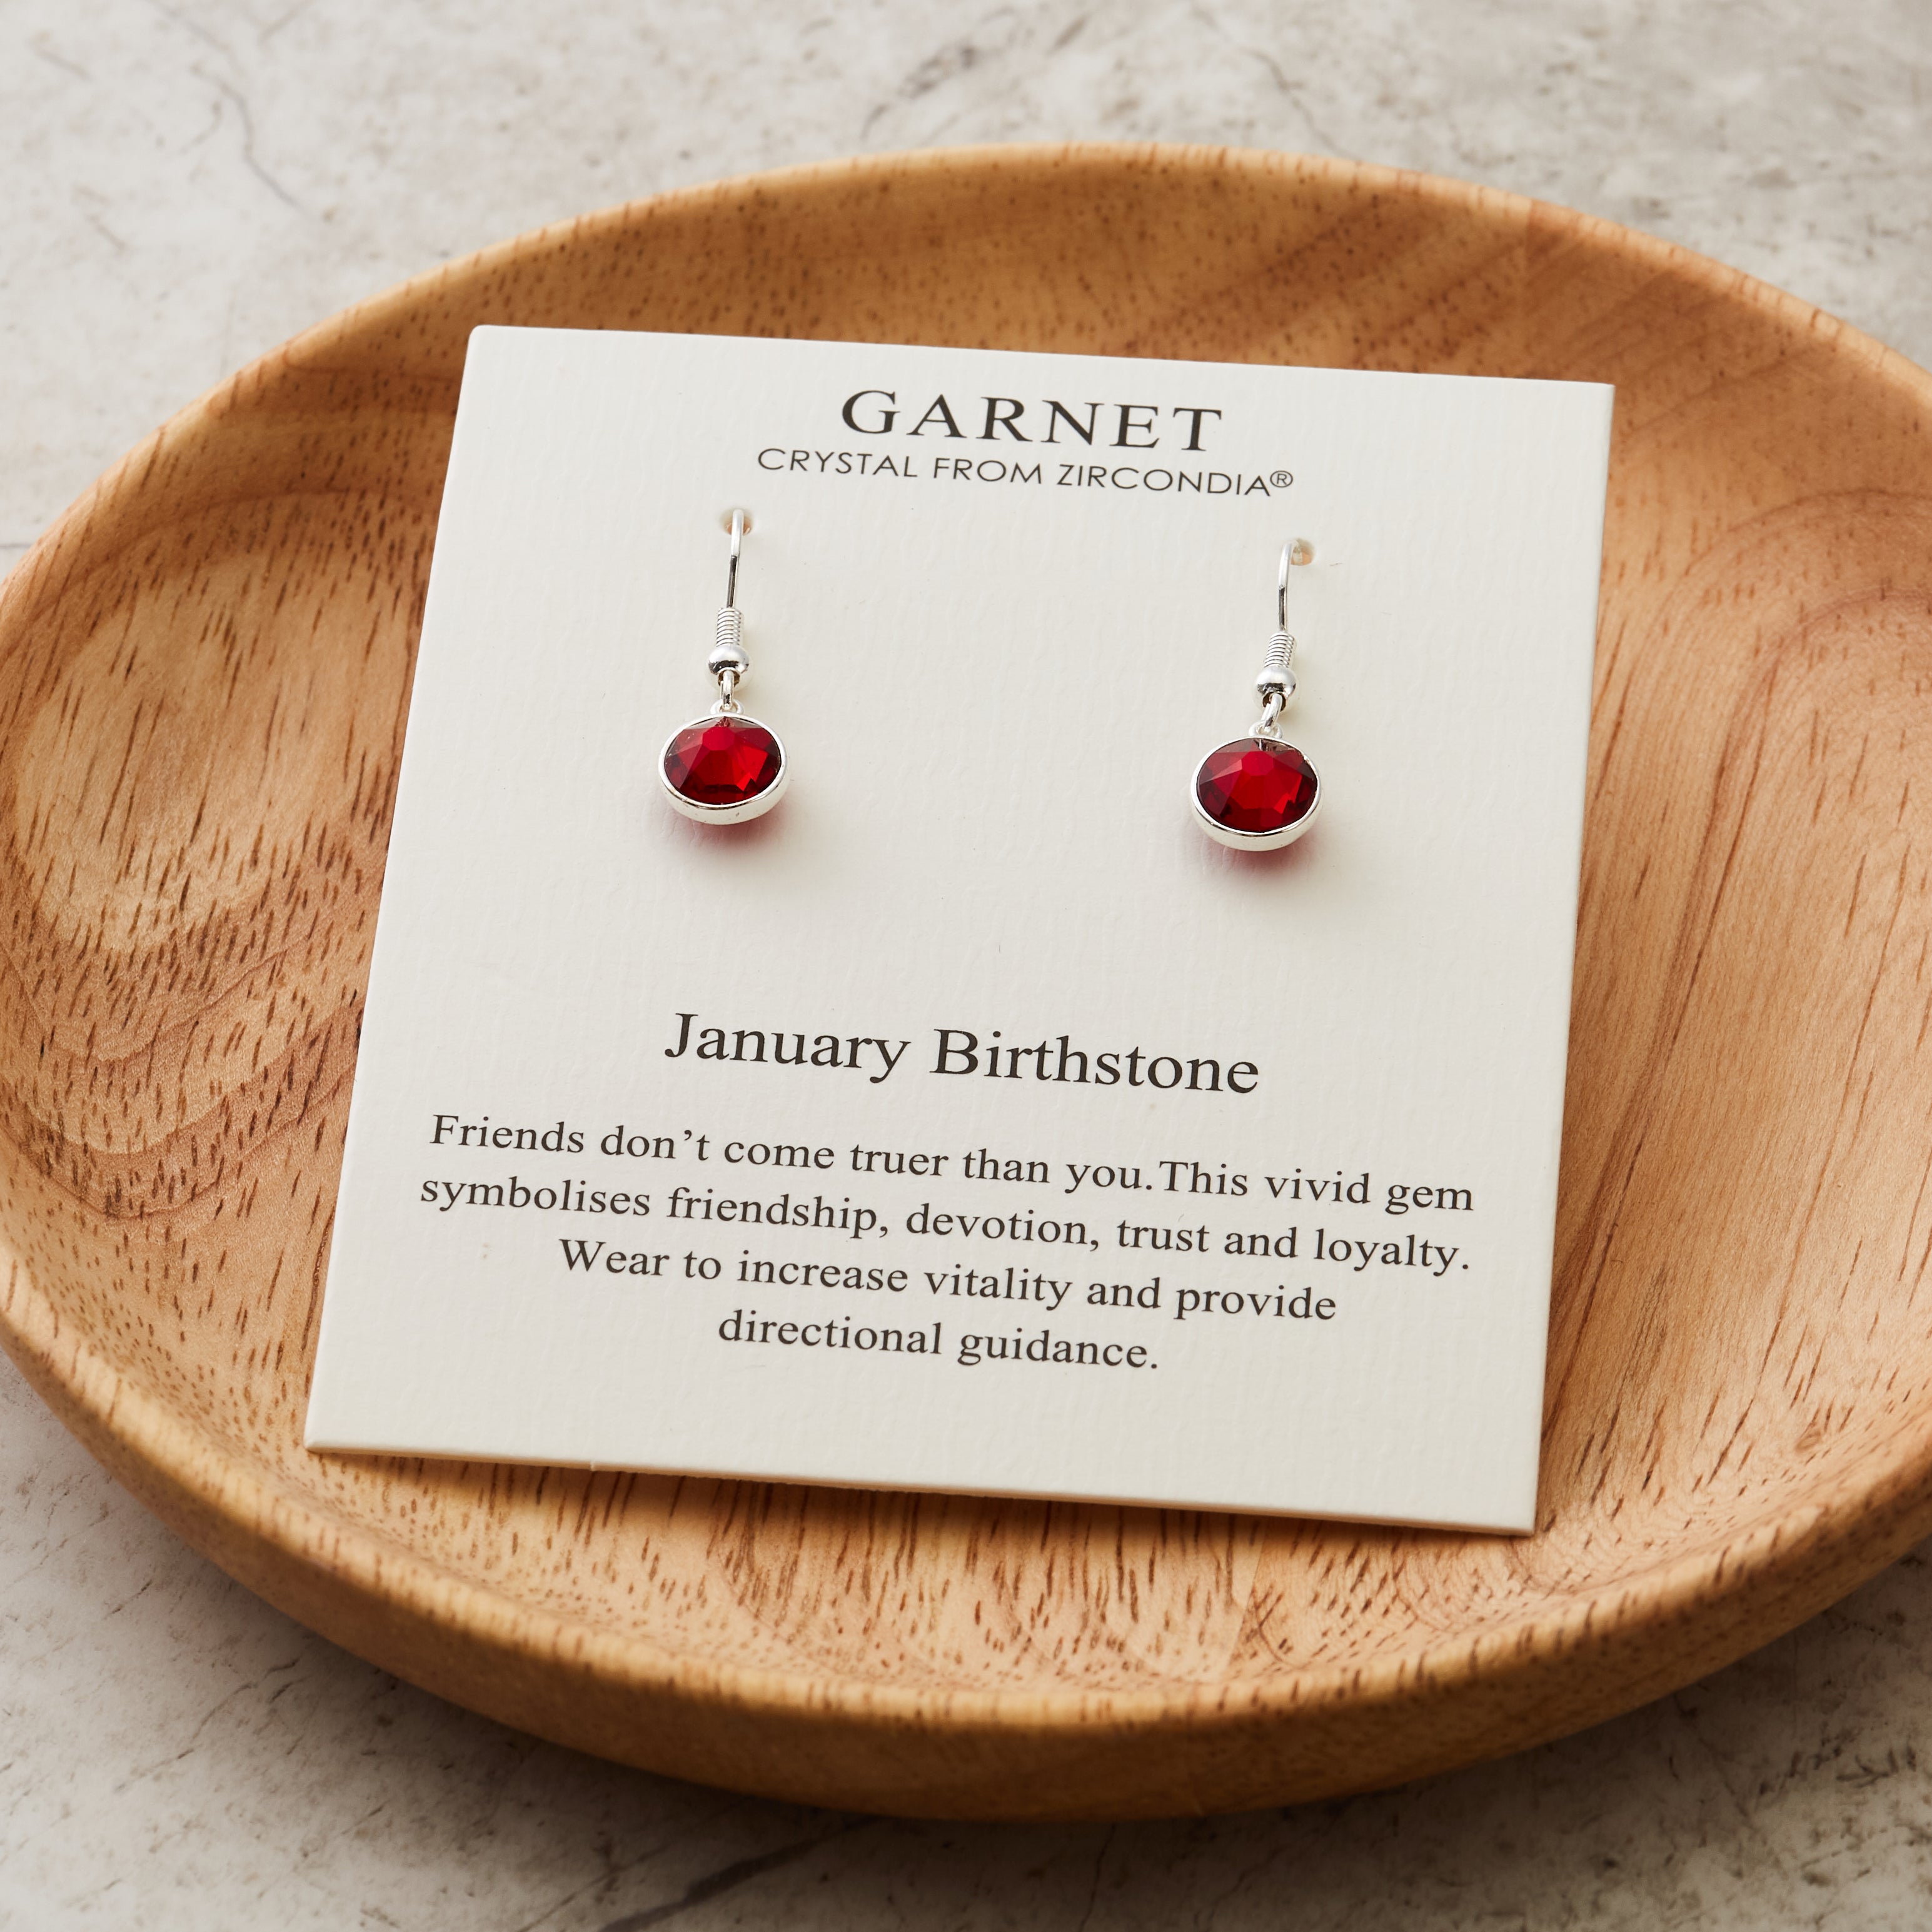 January Birthstone Drop Earrings Created with Garnet Zircondia® Crystals